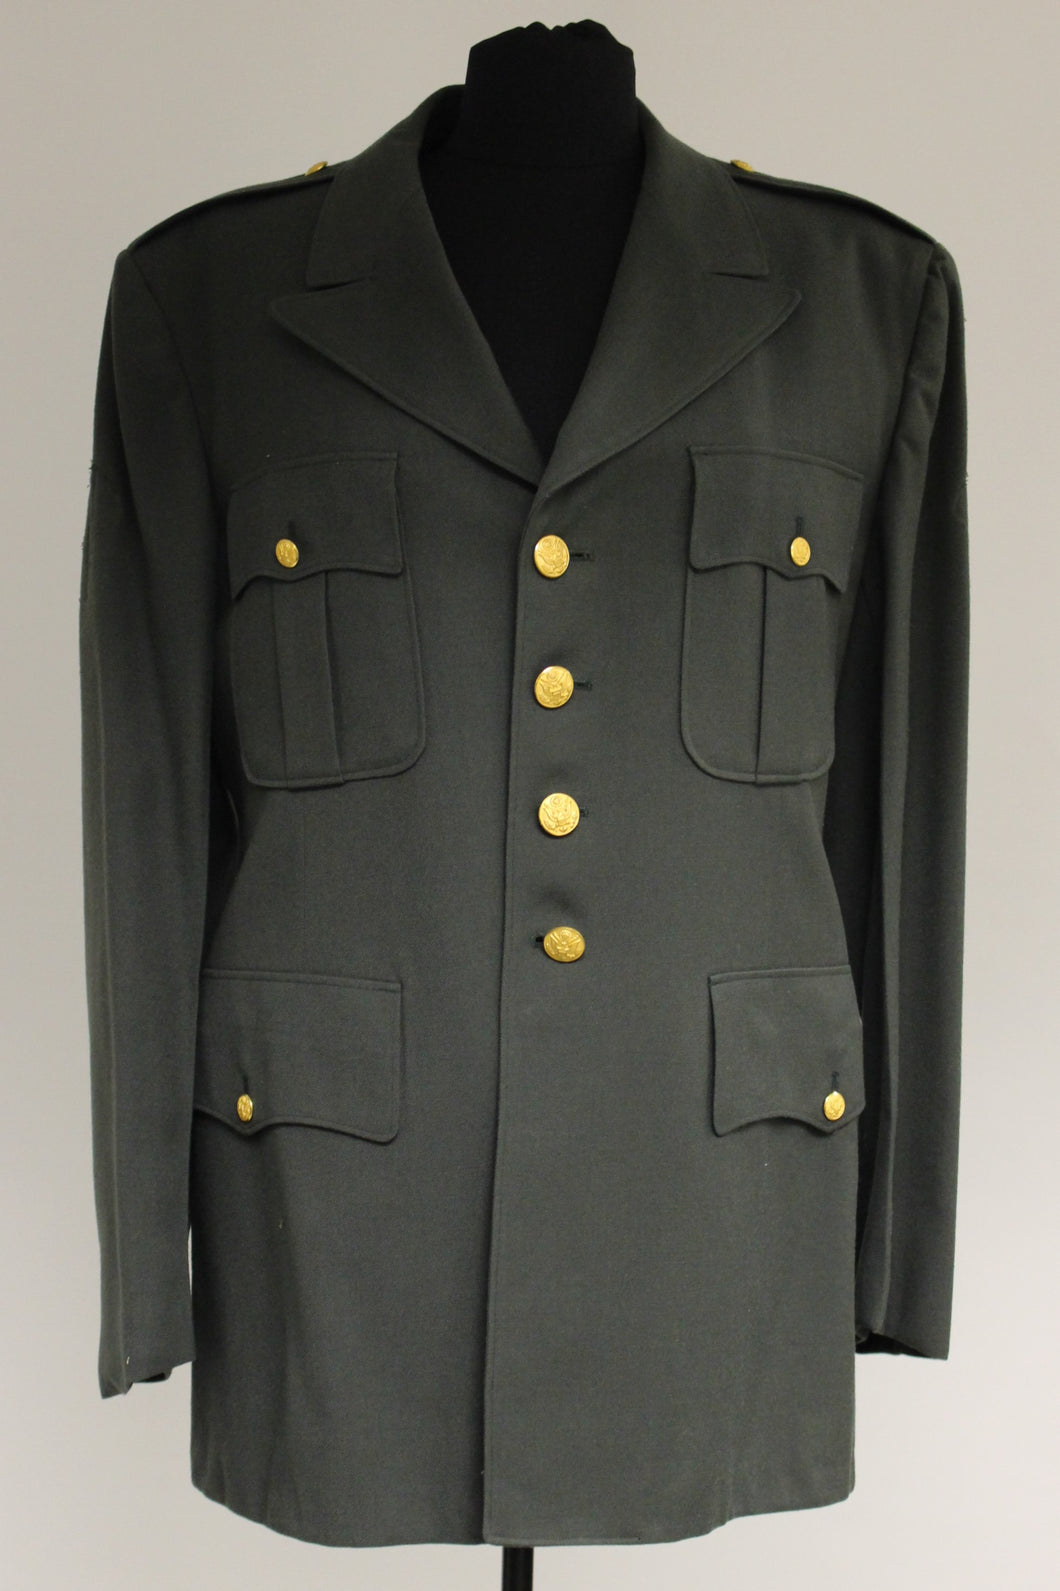 US Army Class As Men's Green Dress Coat / Jacket - 40R - 8405-01-330-7417 - New